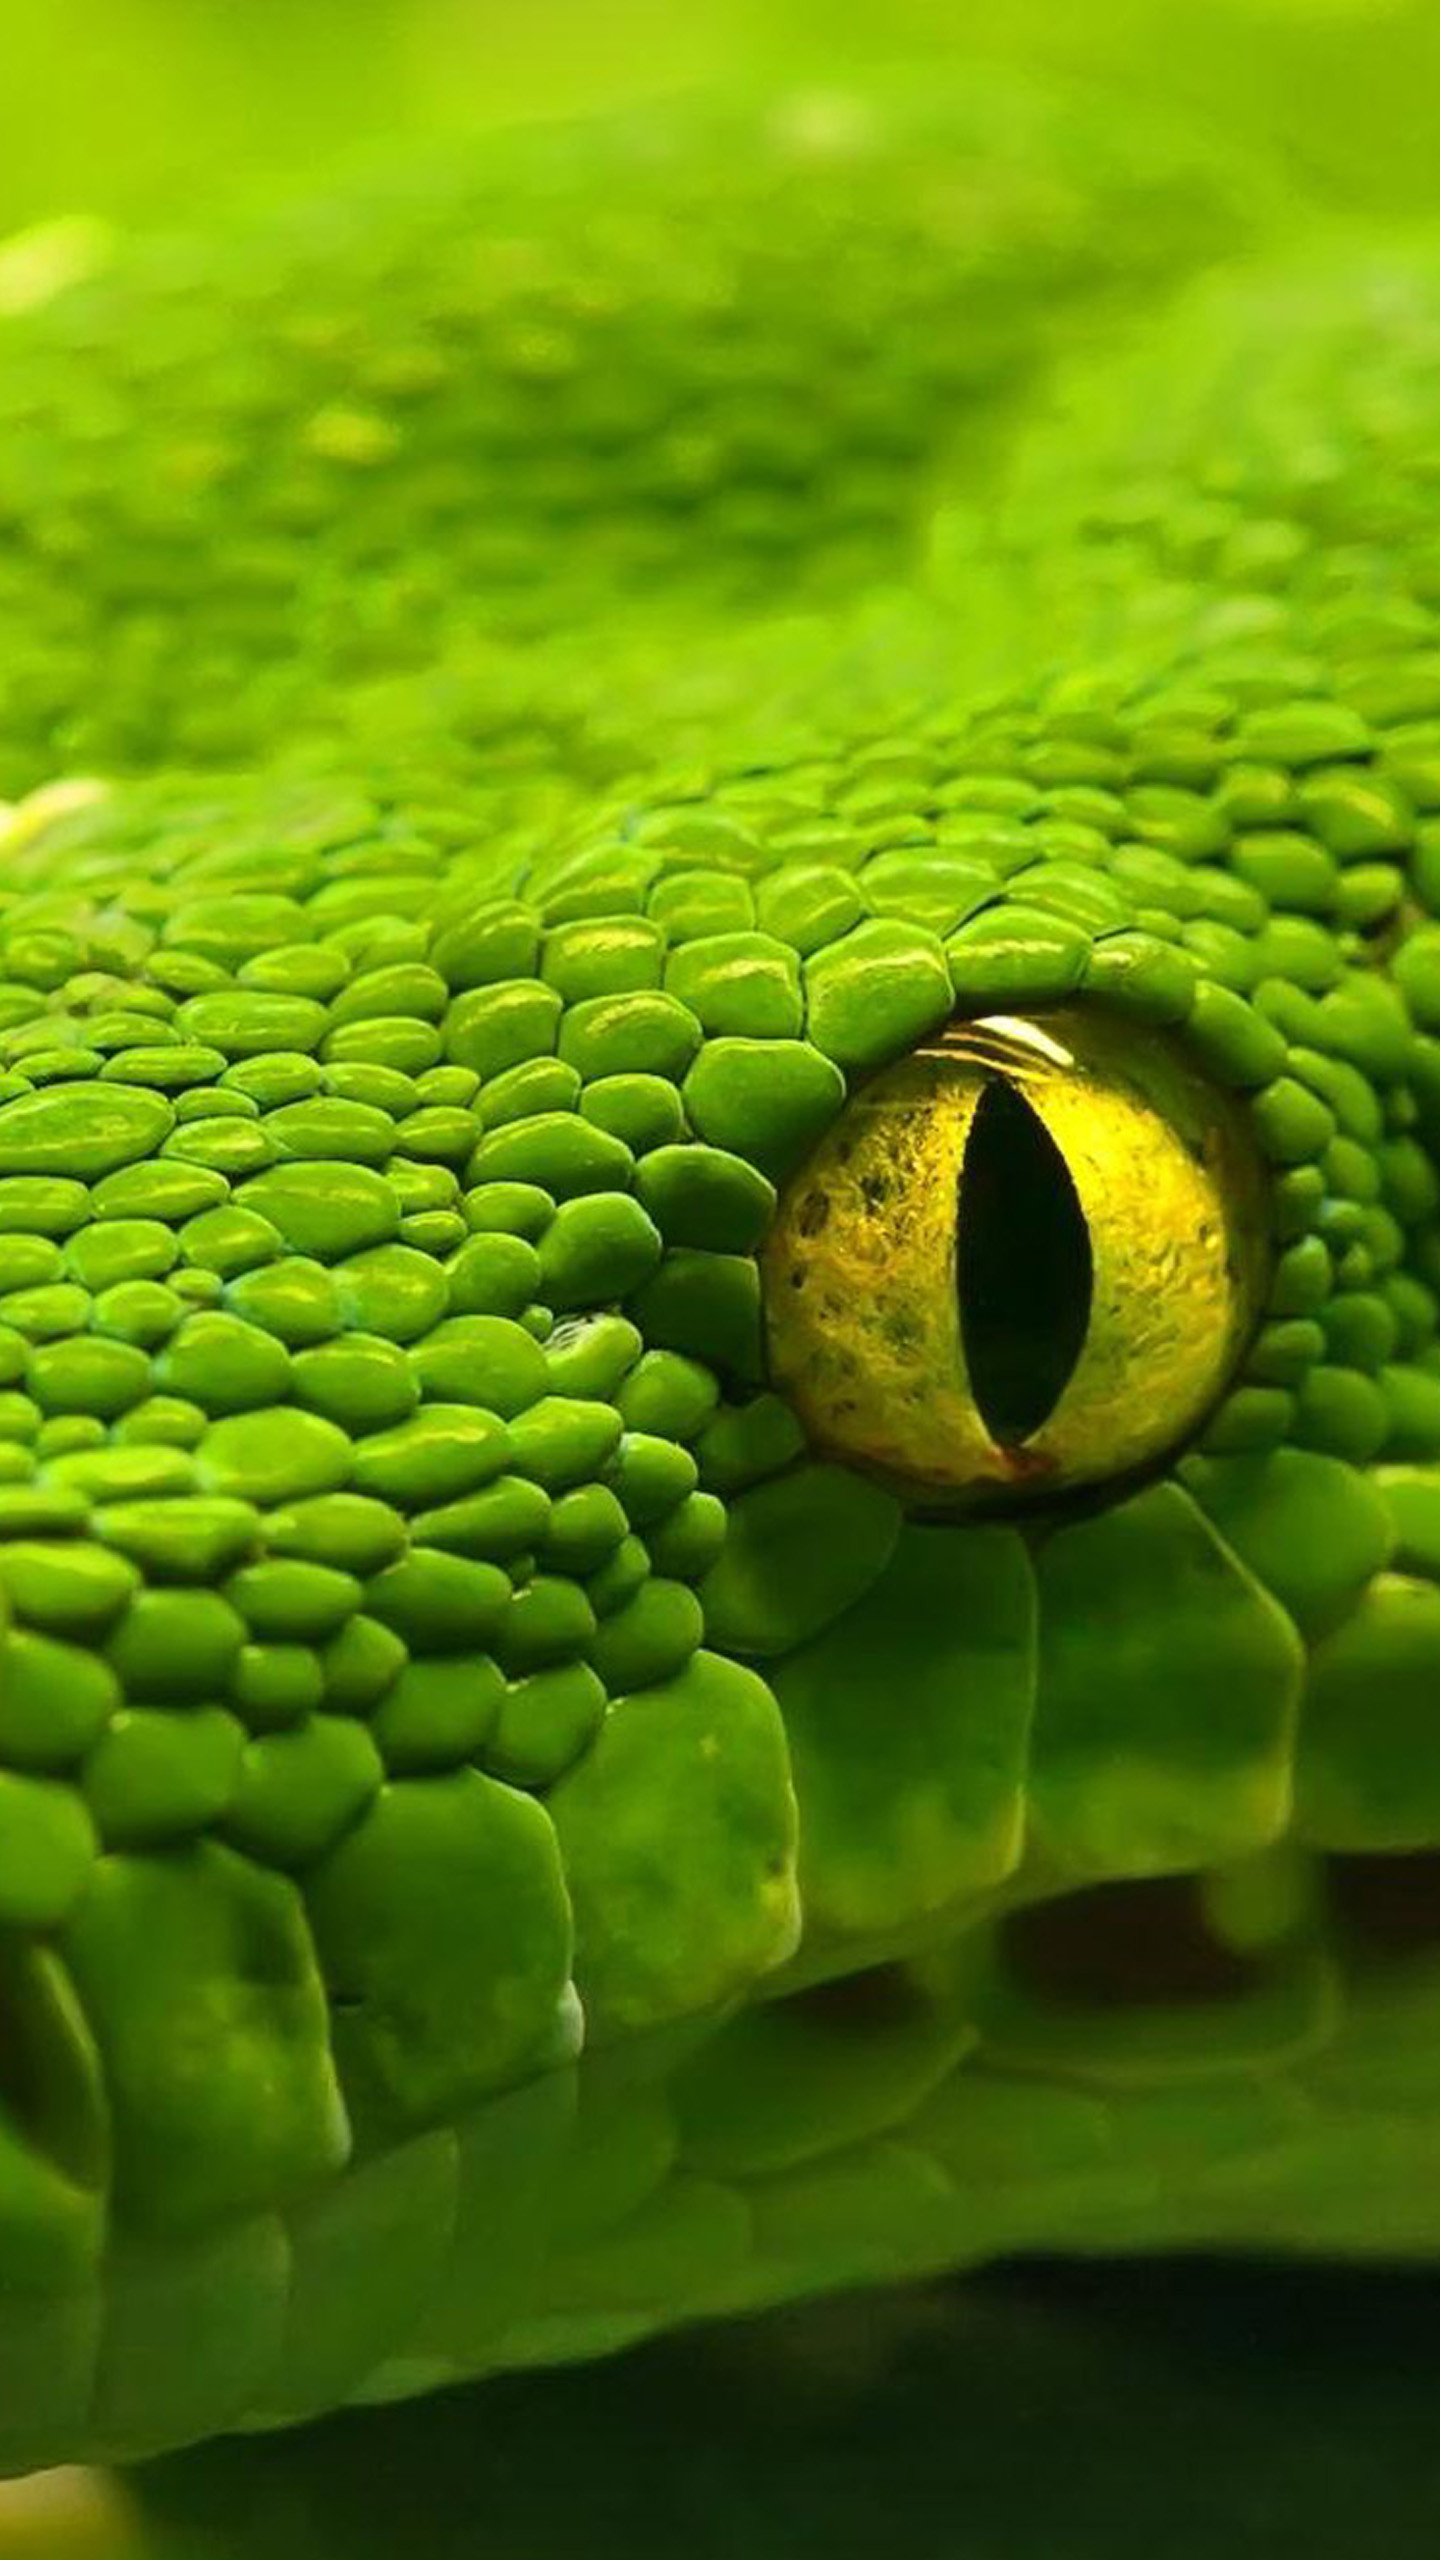 1440x2560 Green Snake Eyes Galaxy S6 Wallpaper